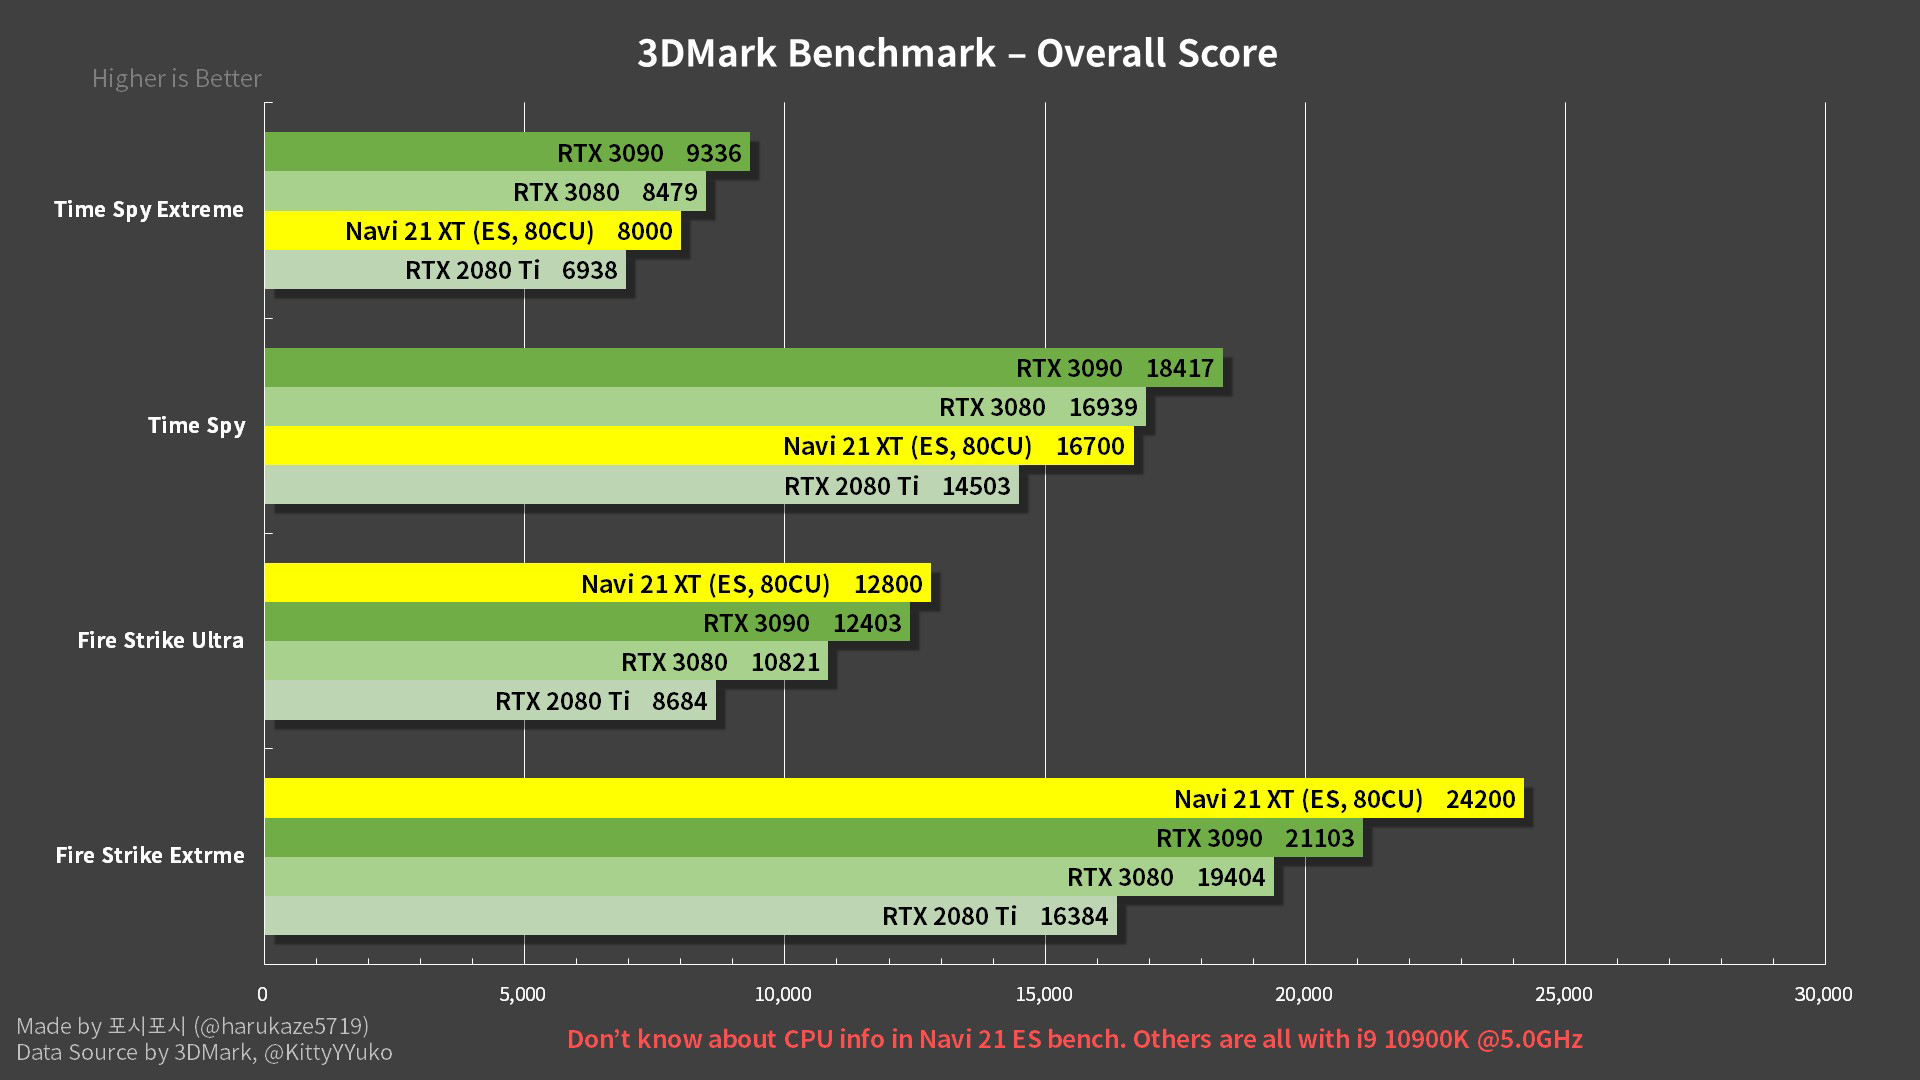 RTX 3070 Ti vs RX 6800 XT Benchmark – 59 Tests 